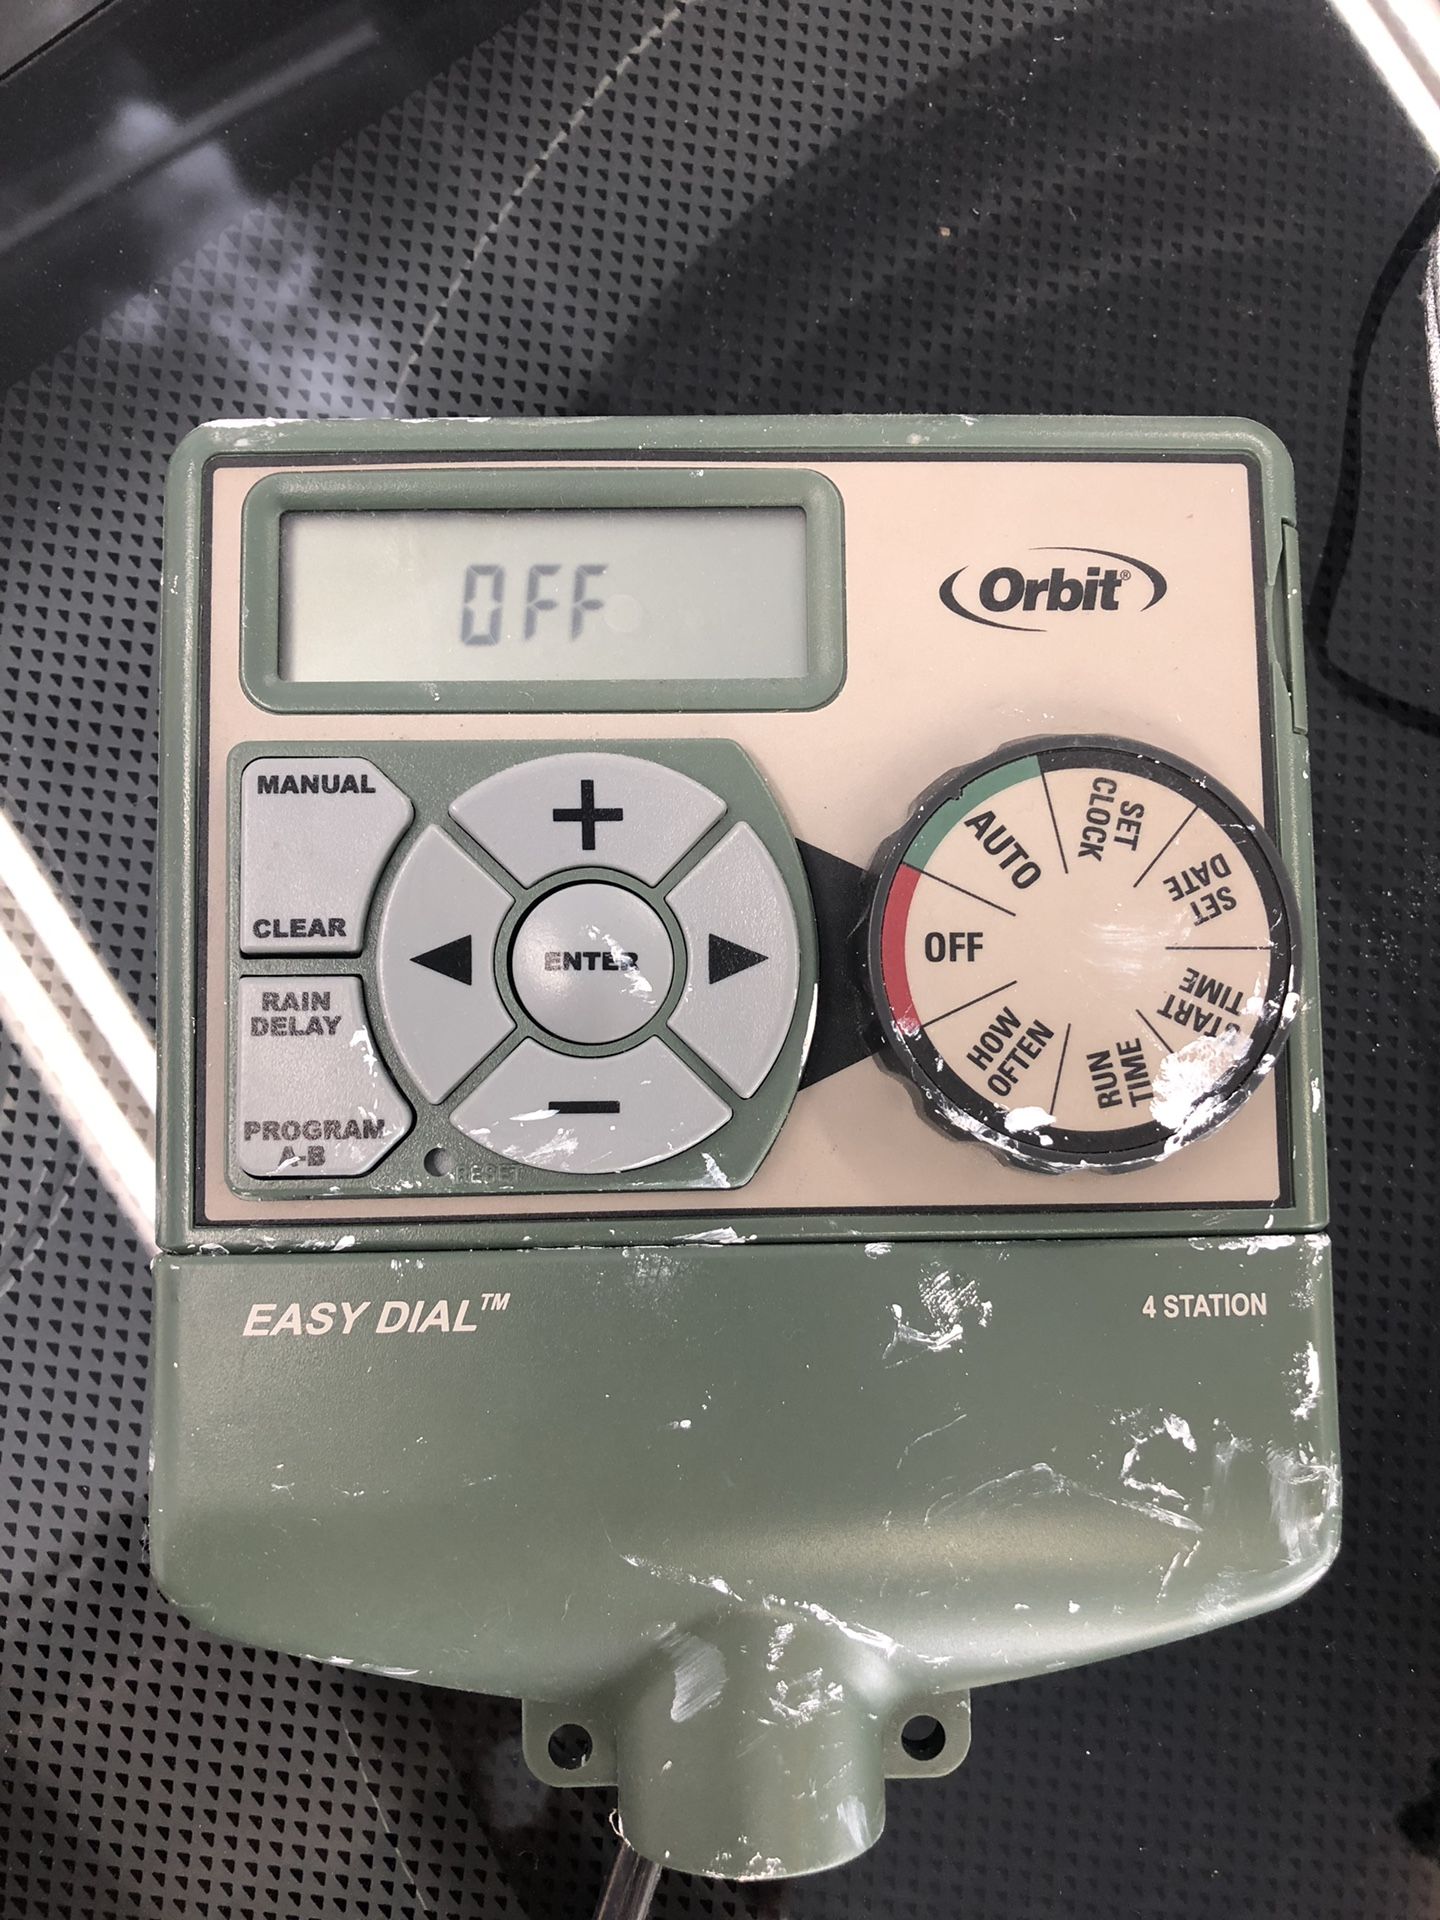 Easy dial - 4 station sprinkler system